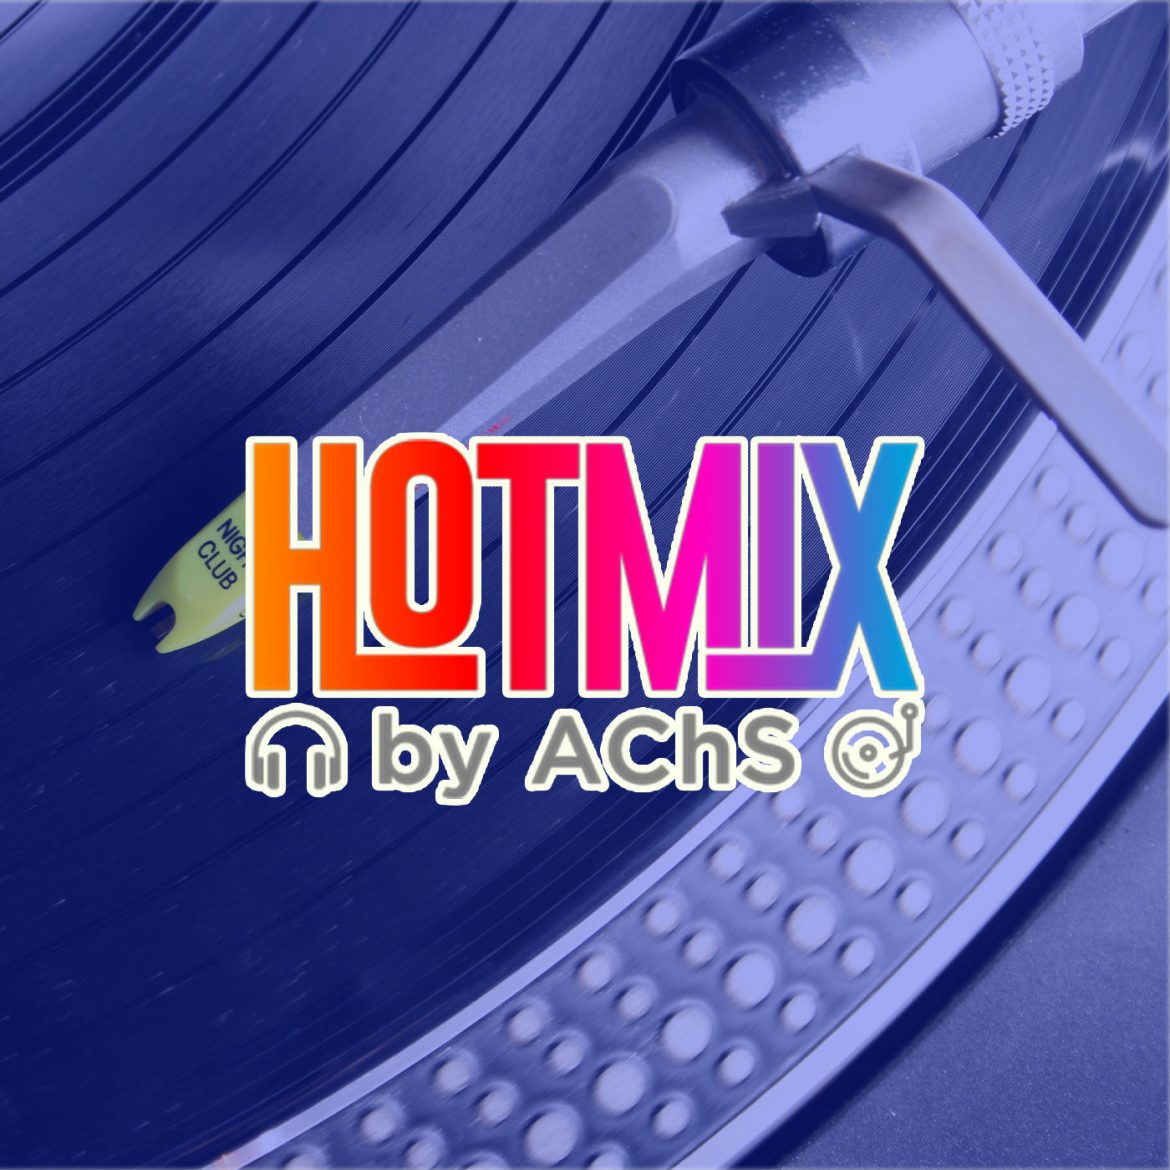 Imagen de una tornamesa análoga con una aguja sobre un disco, representando la sesión de música mezclada Pure Deep House de HotMix en Defrag.mx, realizada el 29 de abril de 2023.